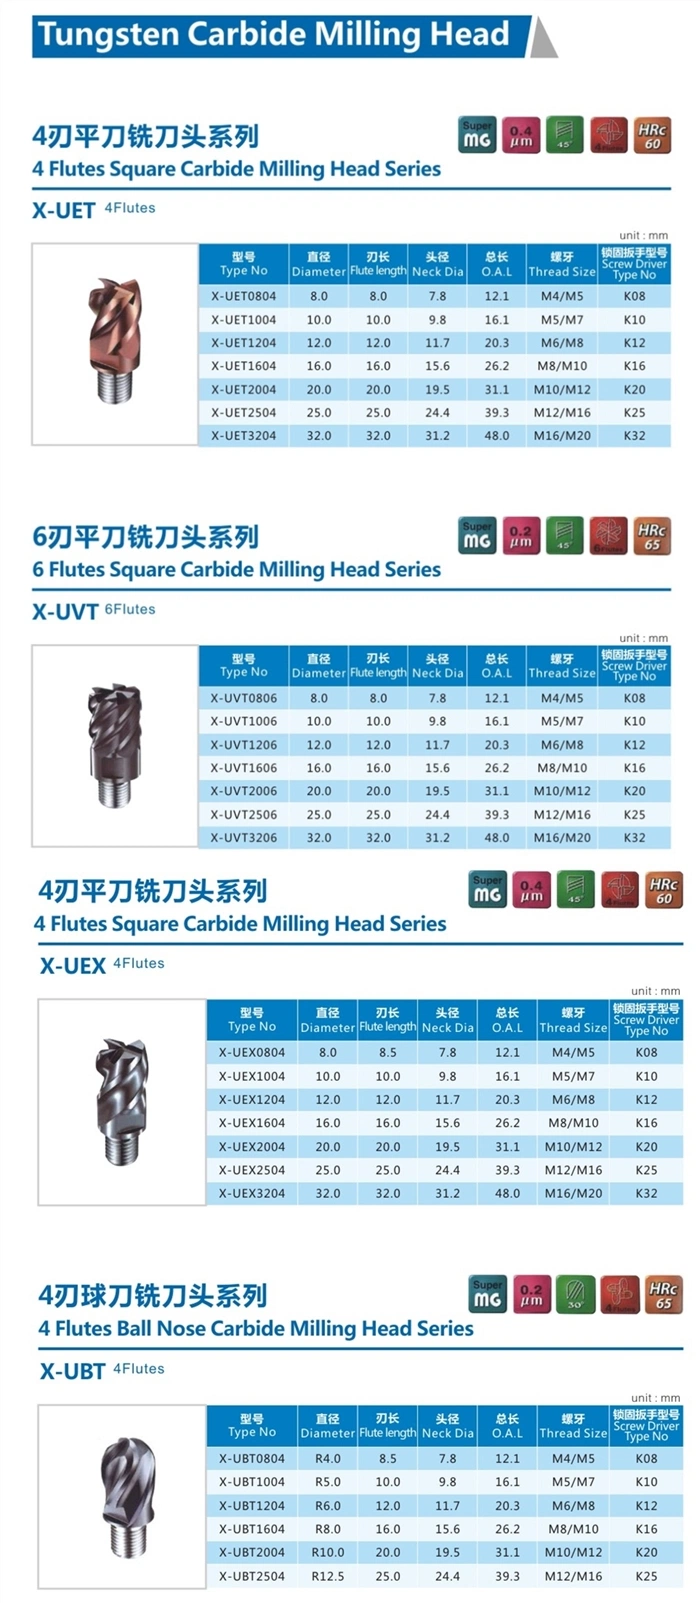 Tungsten Carbide Extension Shanks Screw Thread Boring Bars